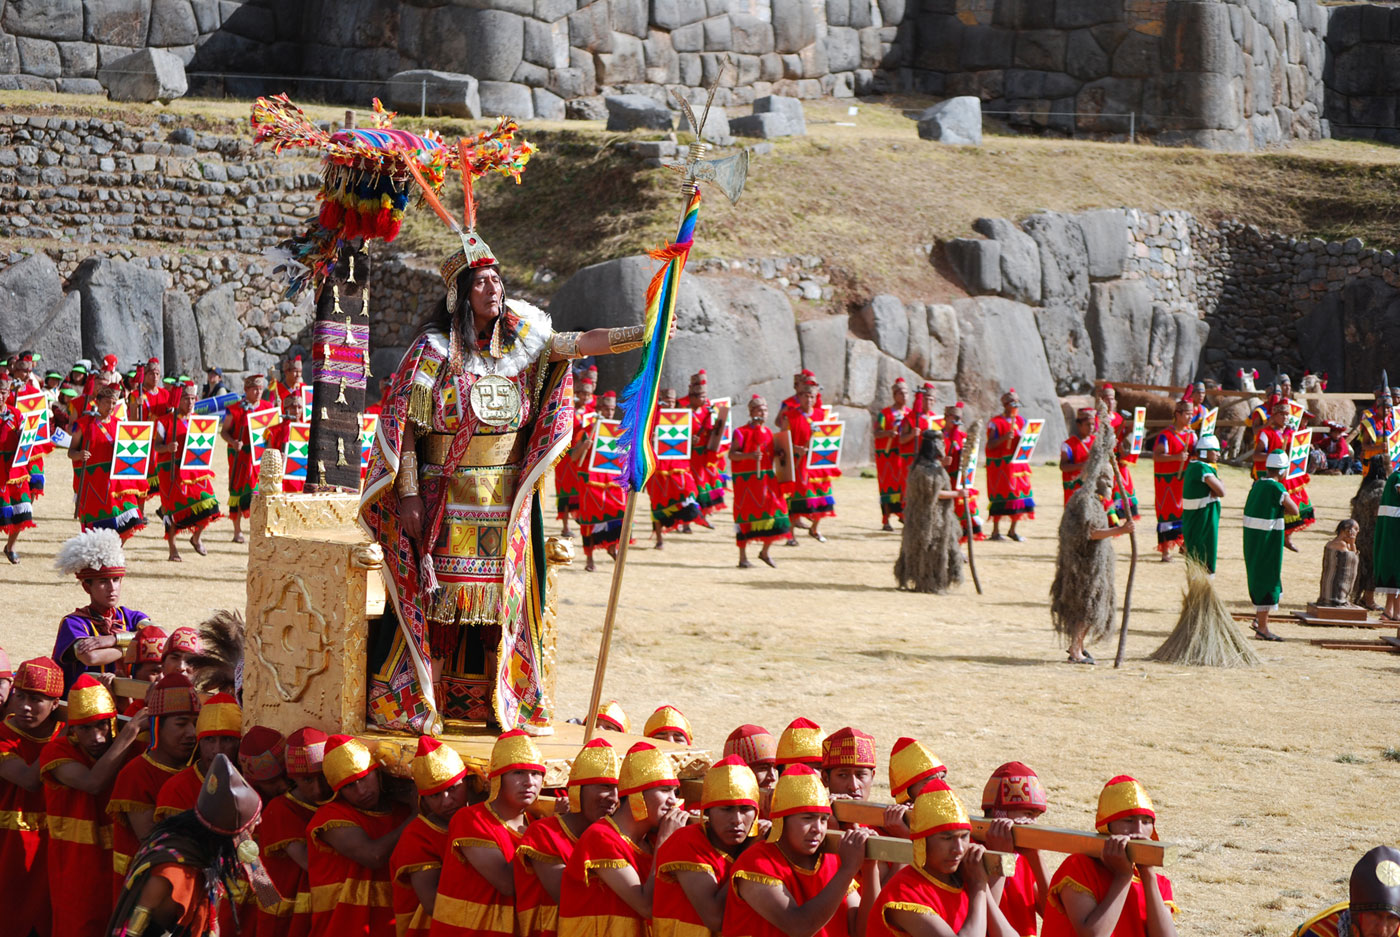 Inti Raymi, the Festival of the Sun